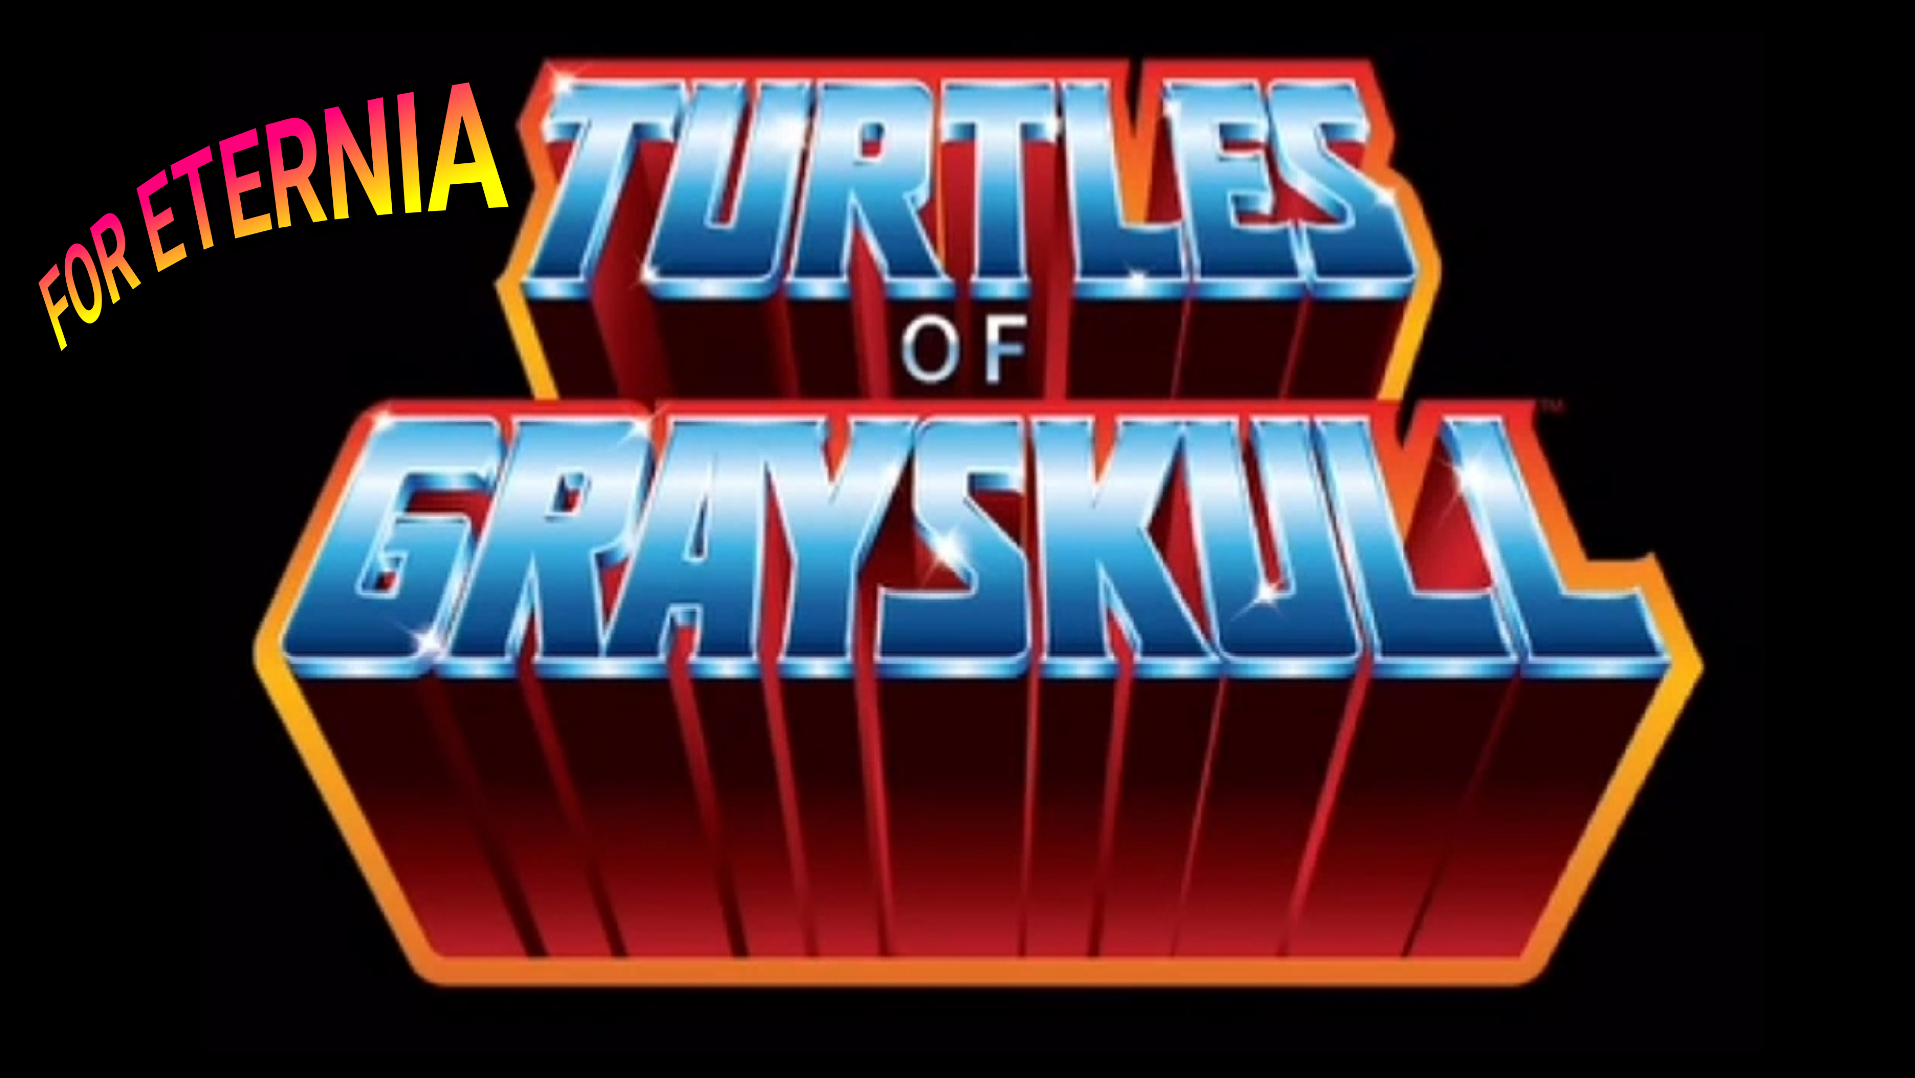 New “TURTLES OF GRAYSKULL” Promotional Video Released!